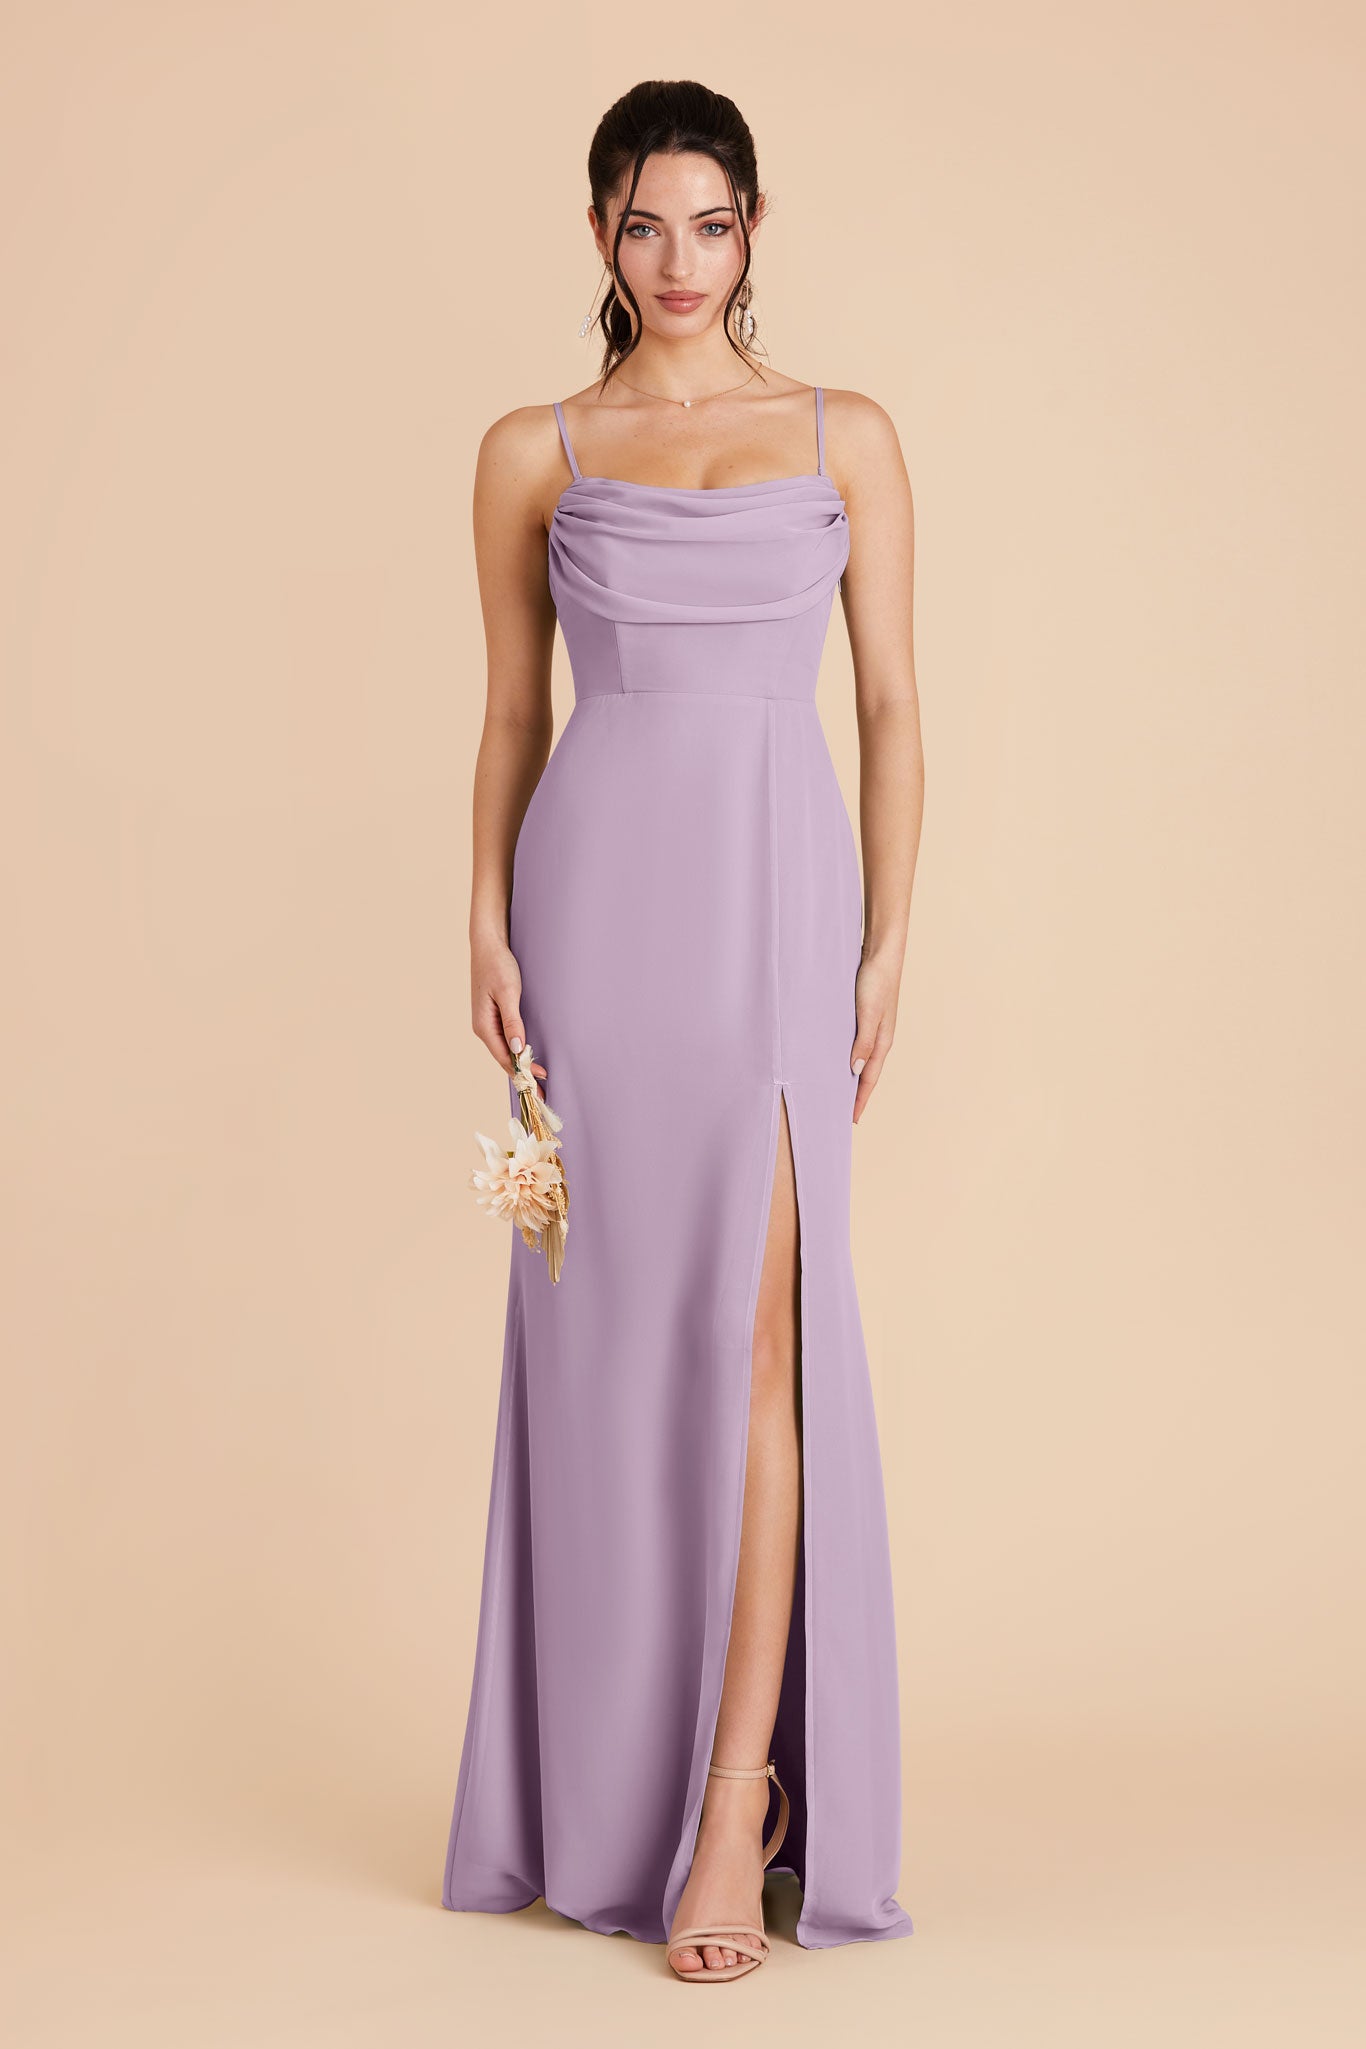 Lavender Mira Convertible Dress by Birdy Grey